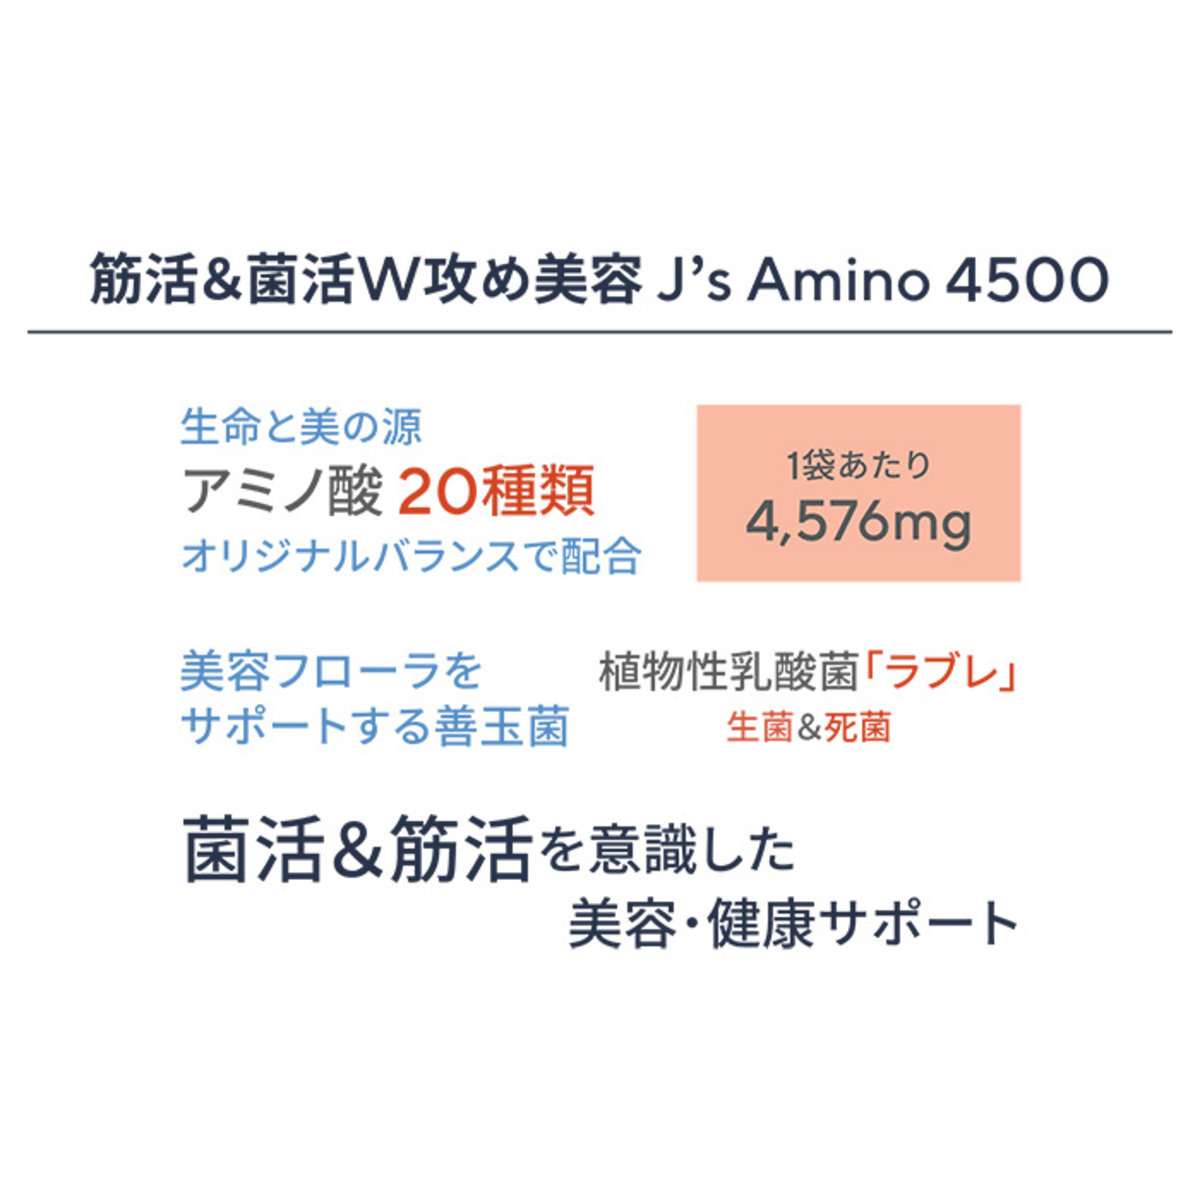 J's Amino 4500 90包特別BOX - QVC.jp